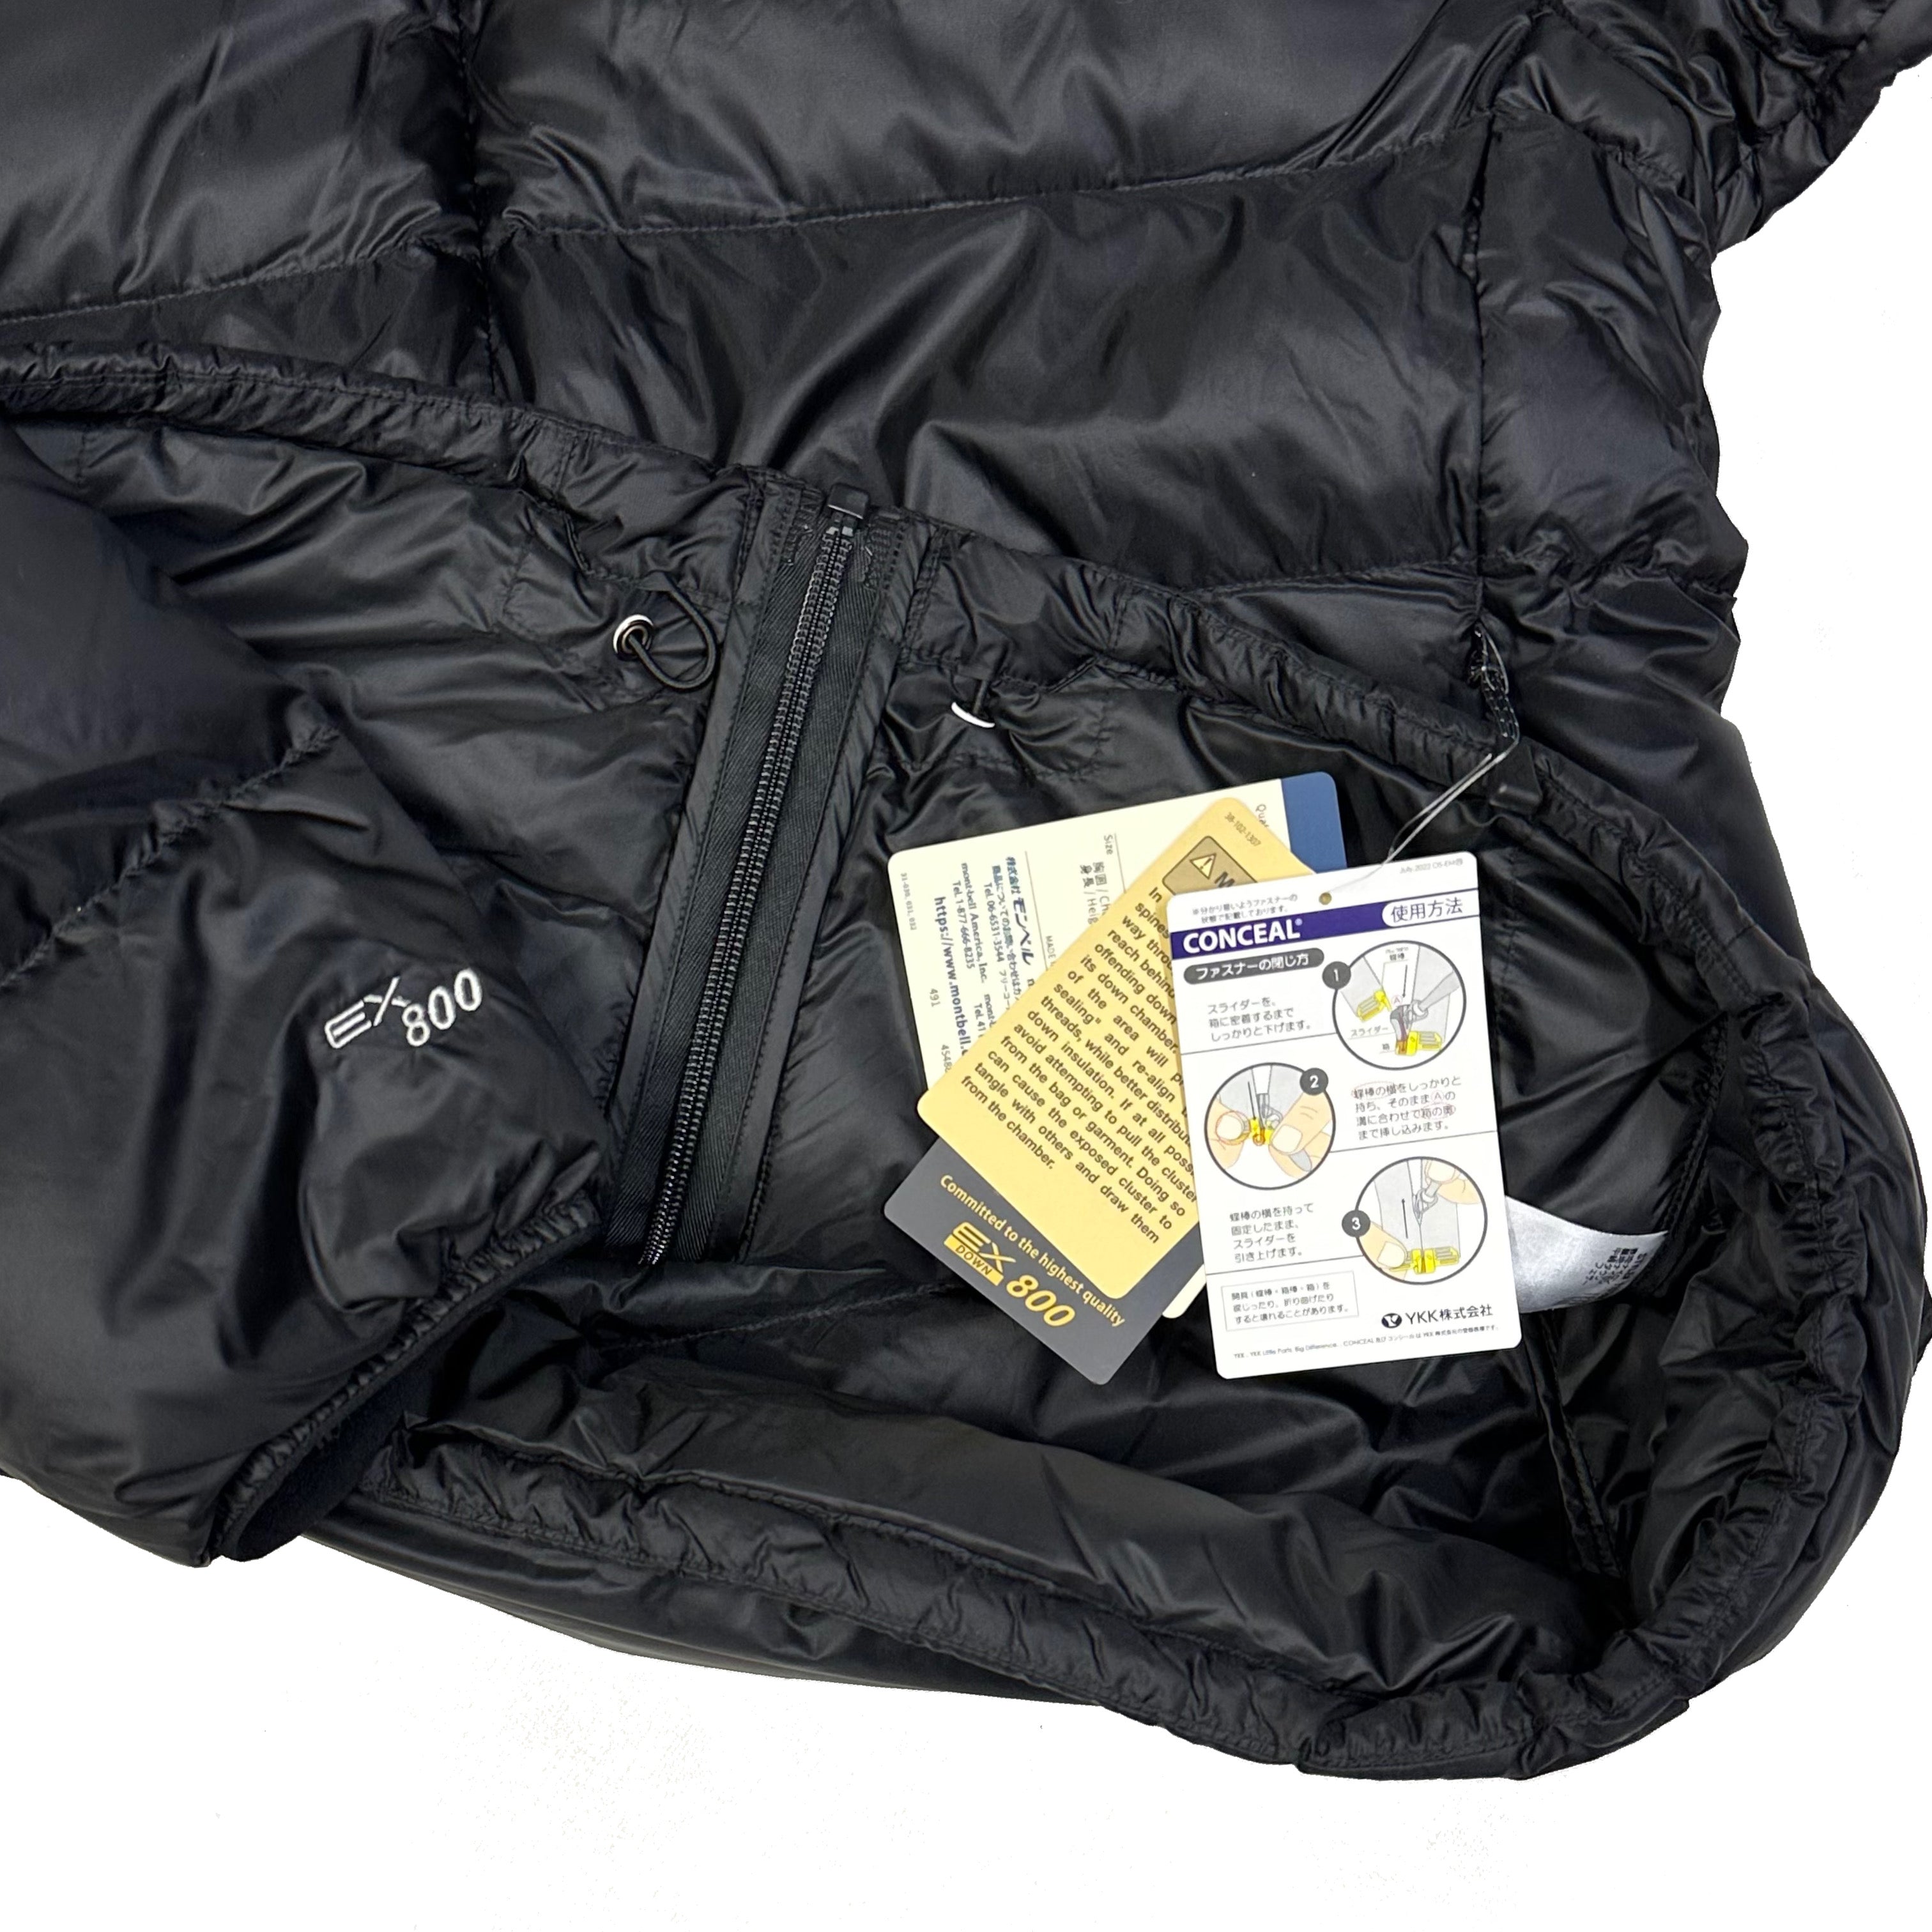 Montbell Alpine EX 800 Down Puffer Jacket In Black ( L )